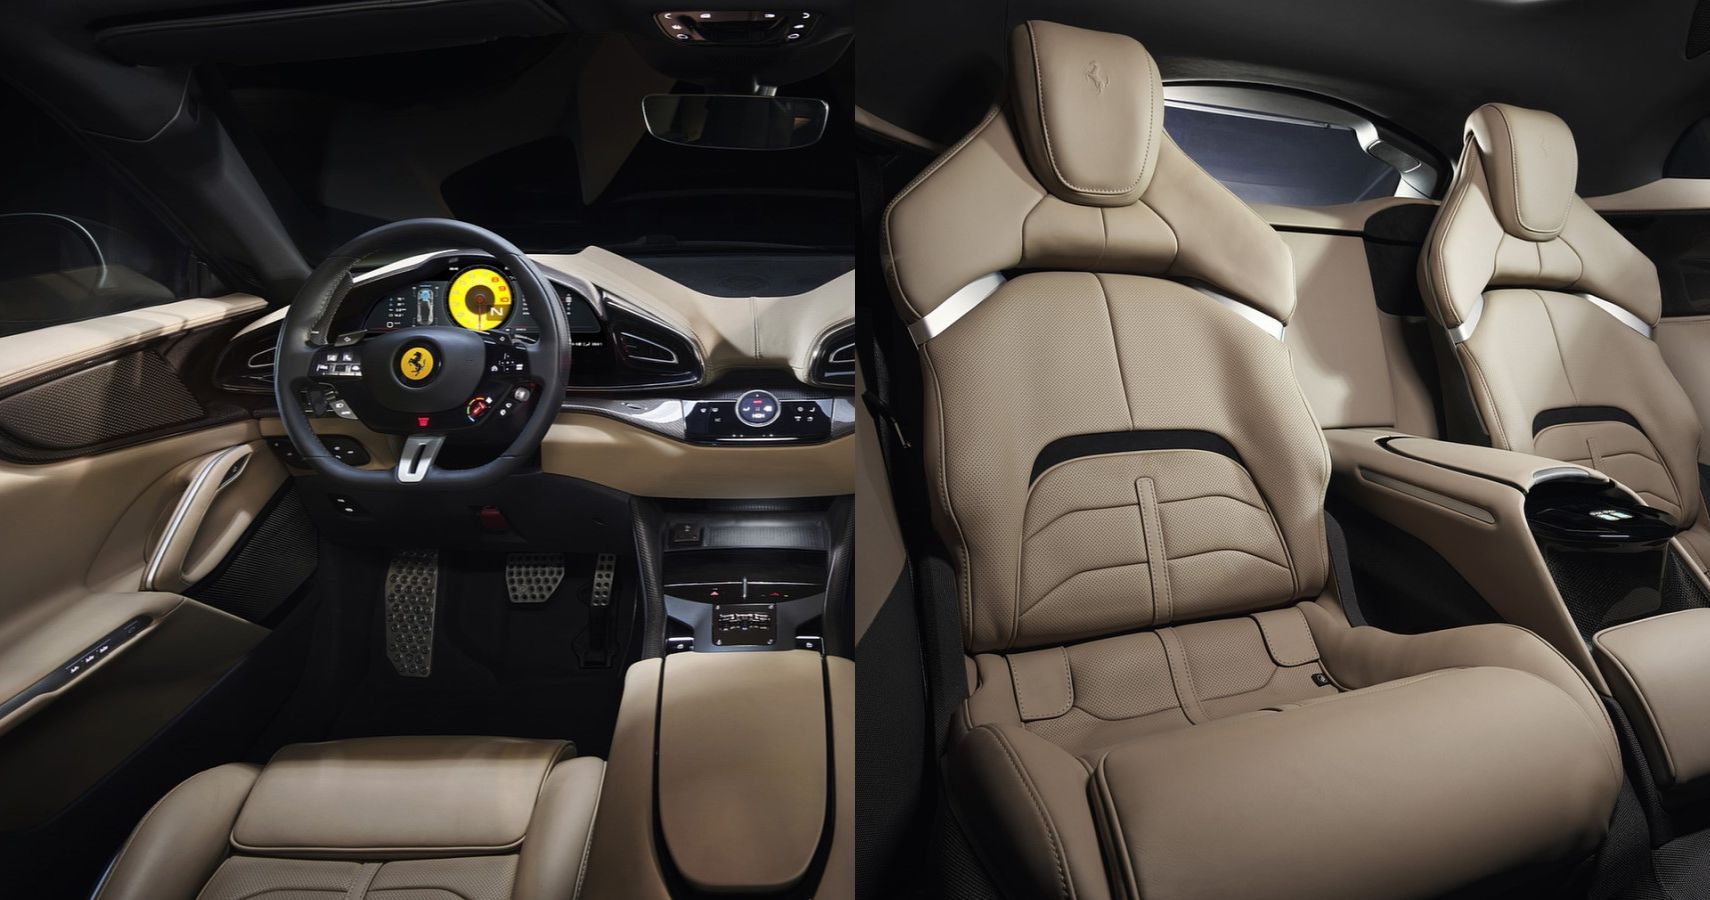 Ferrari Purosangue interior view